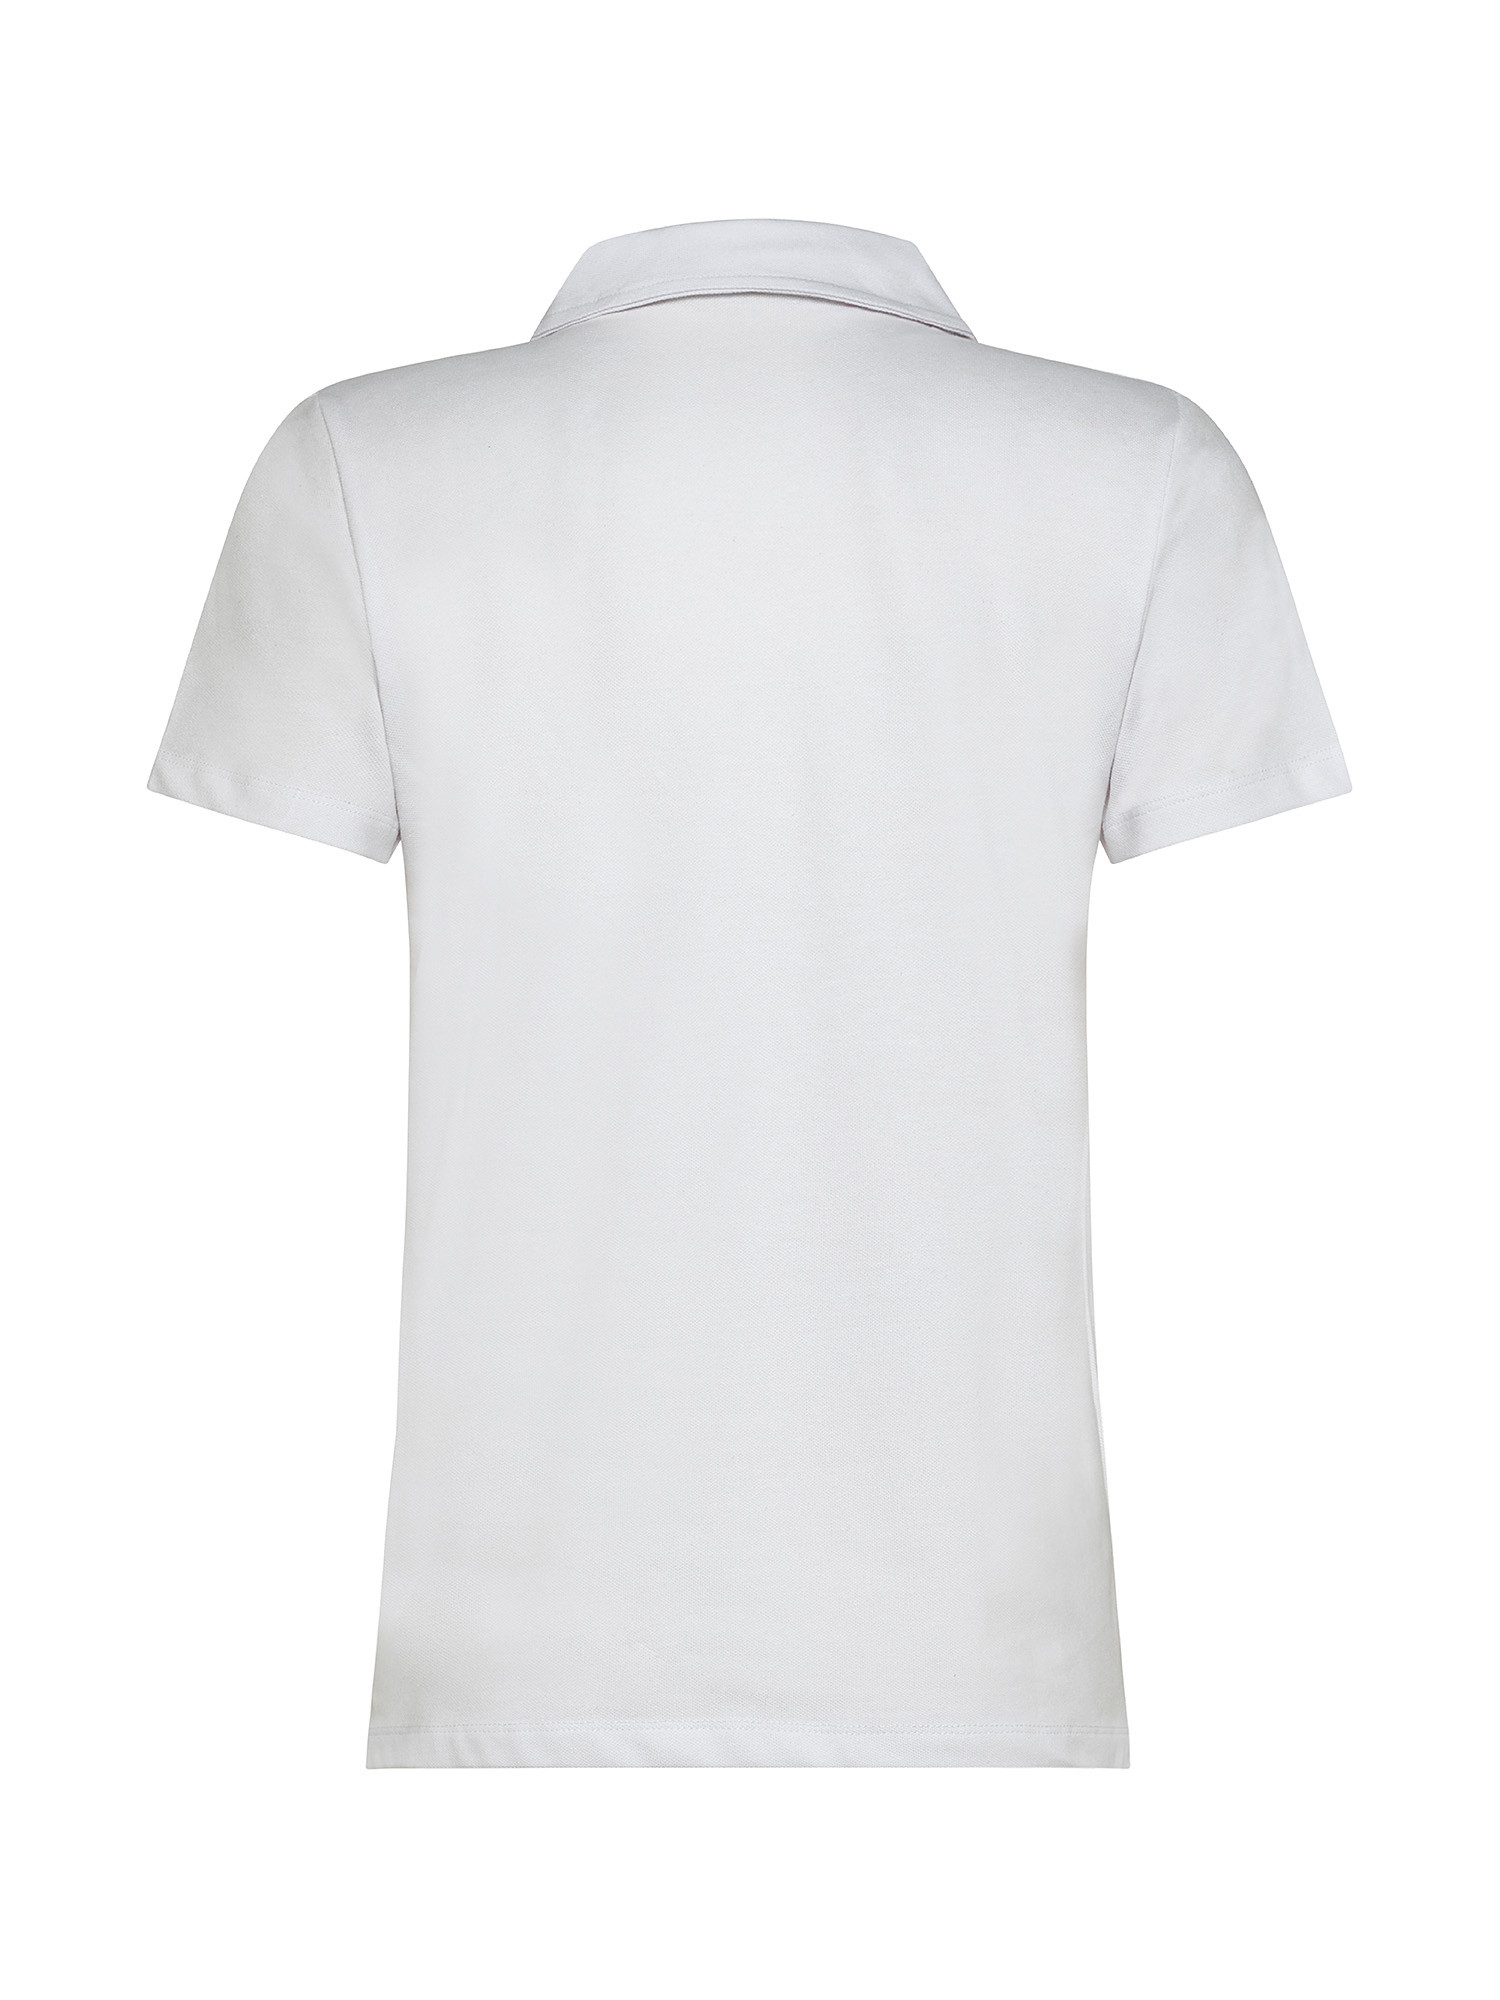 T-shirt with rhinestones, White, large image number 1